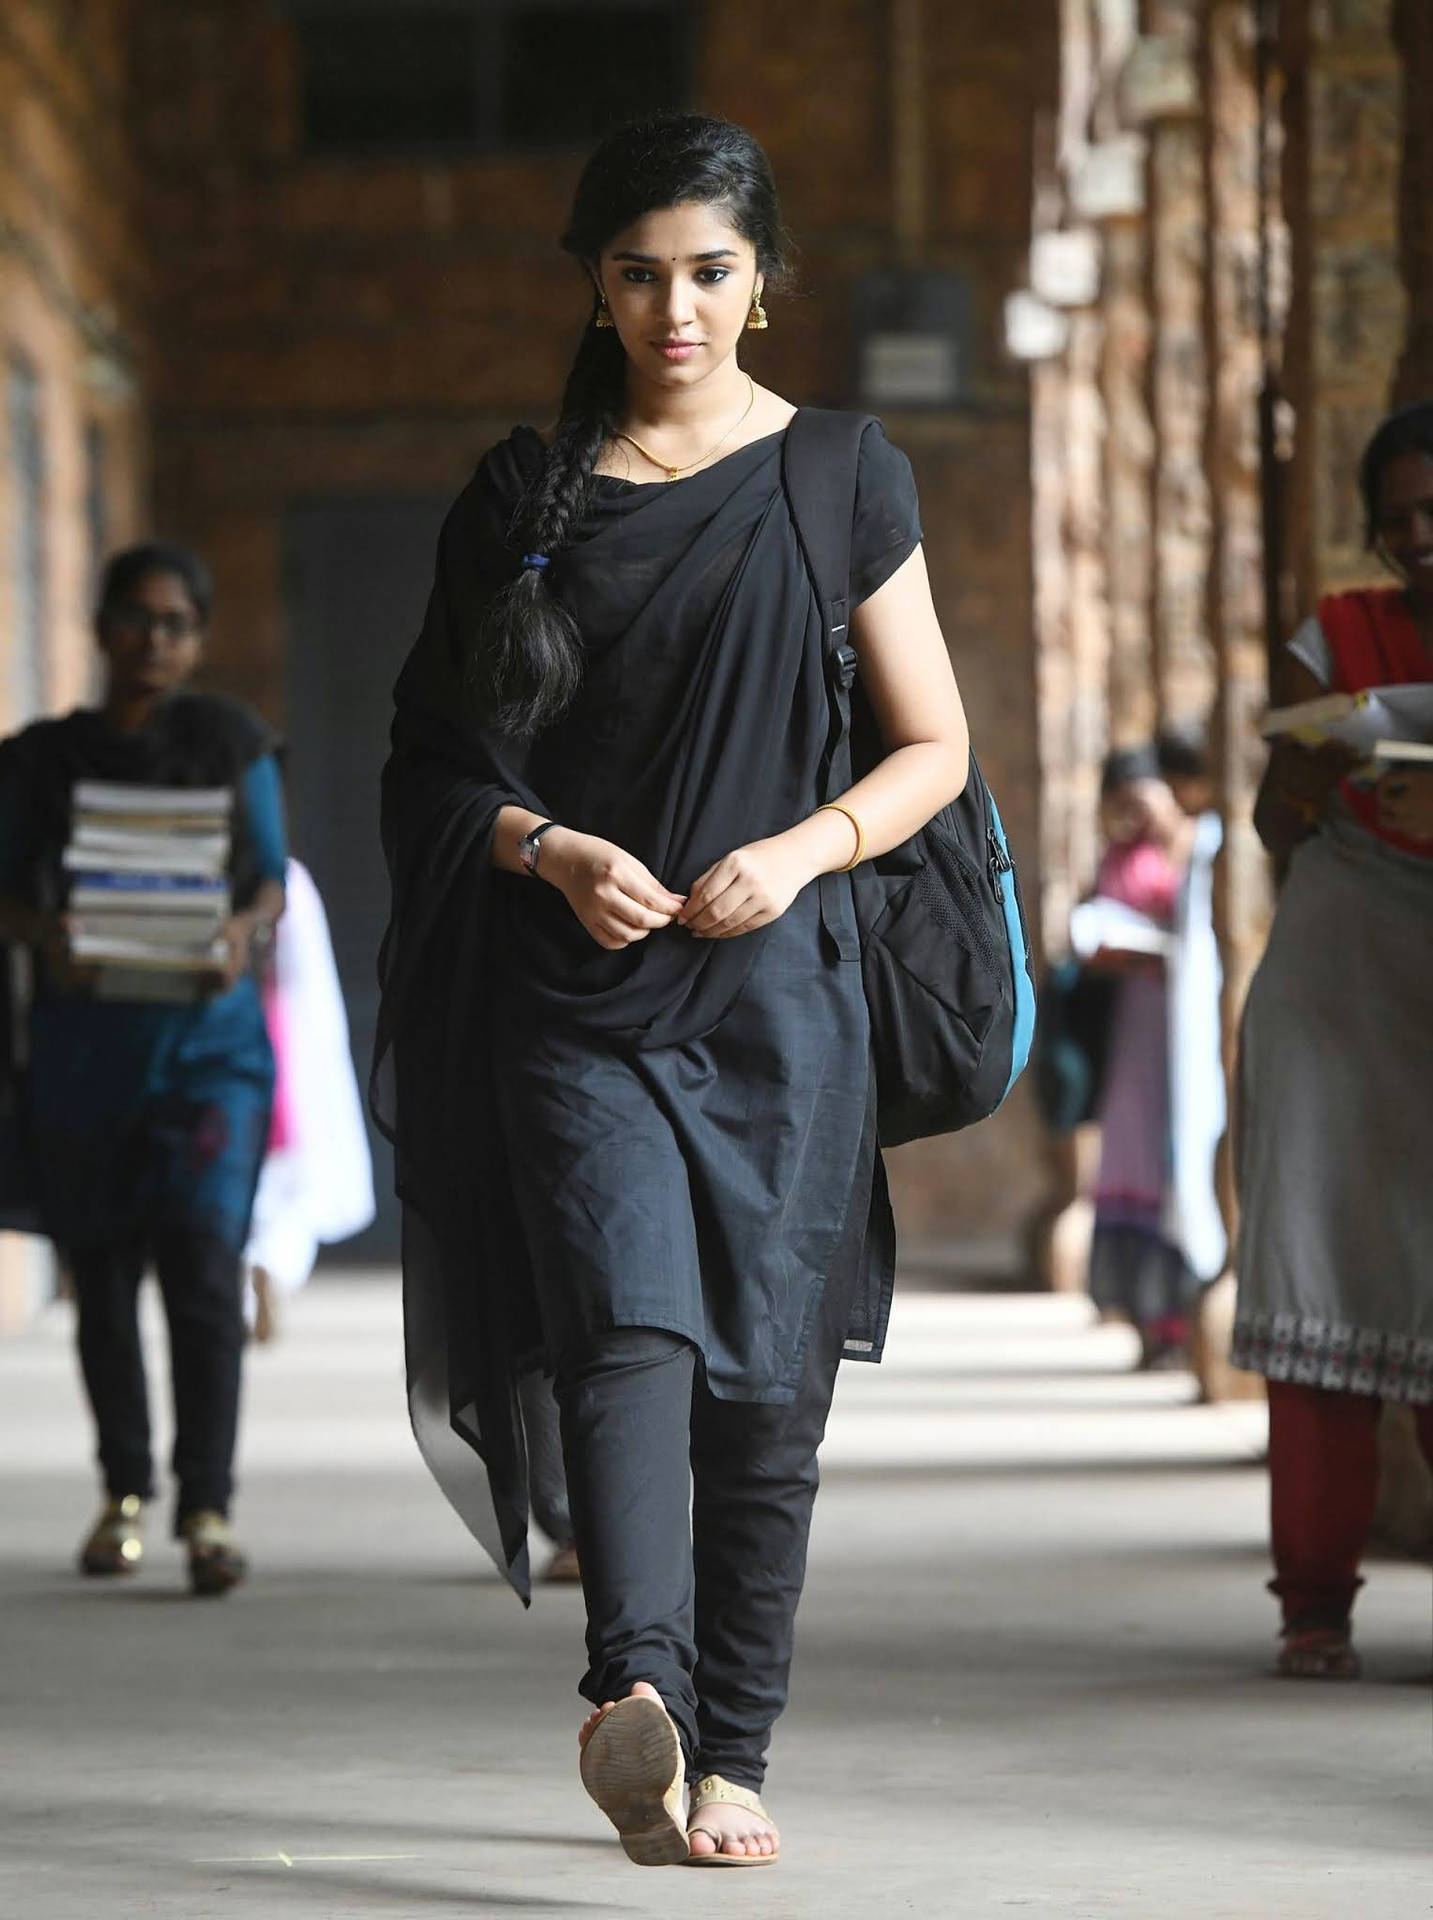 Uppena College Student Sangeetha Background